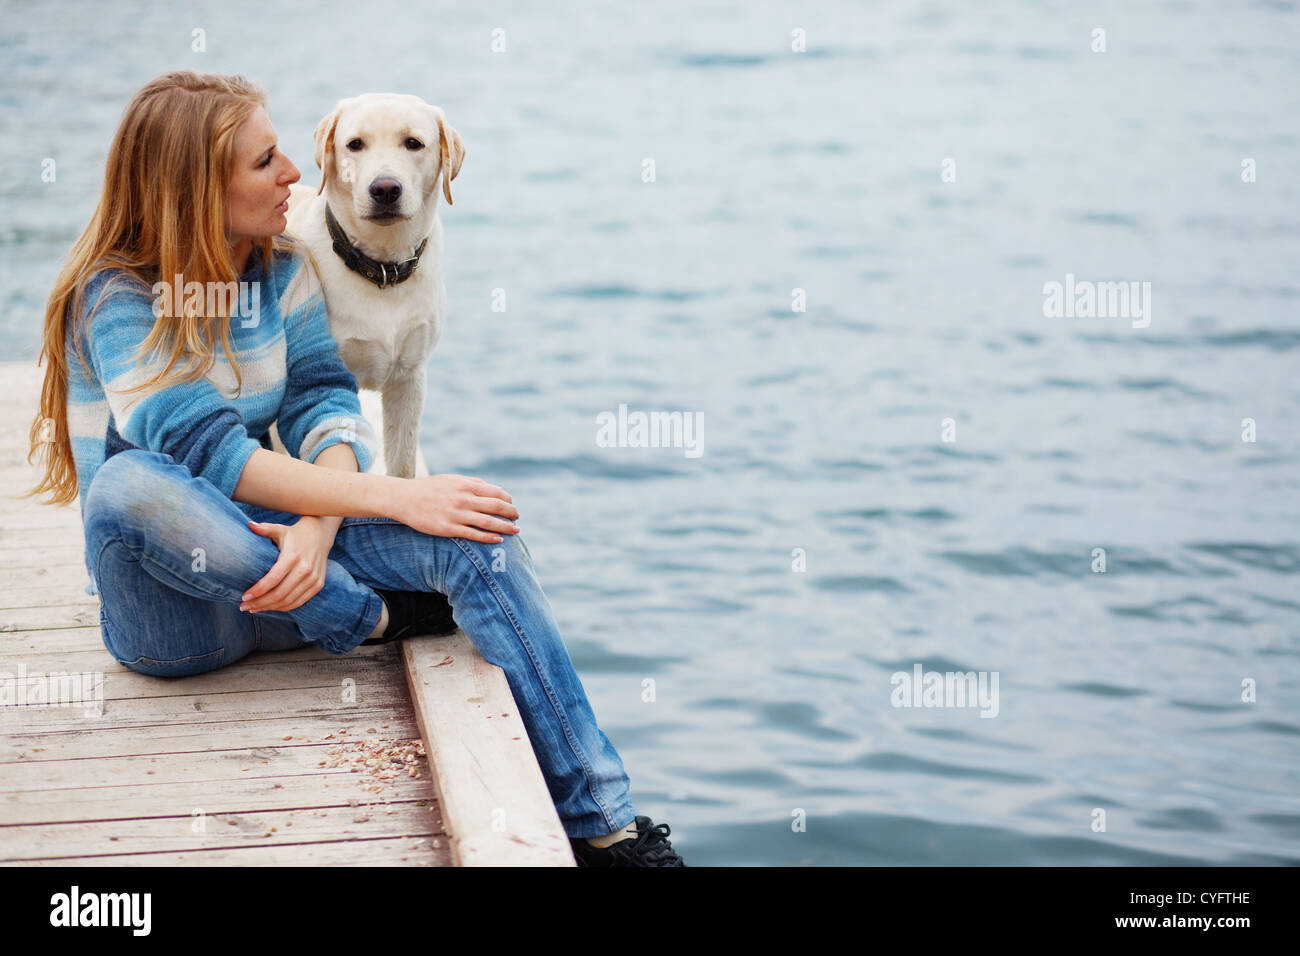 Girl with dog Stock Photo